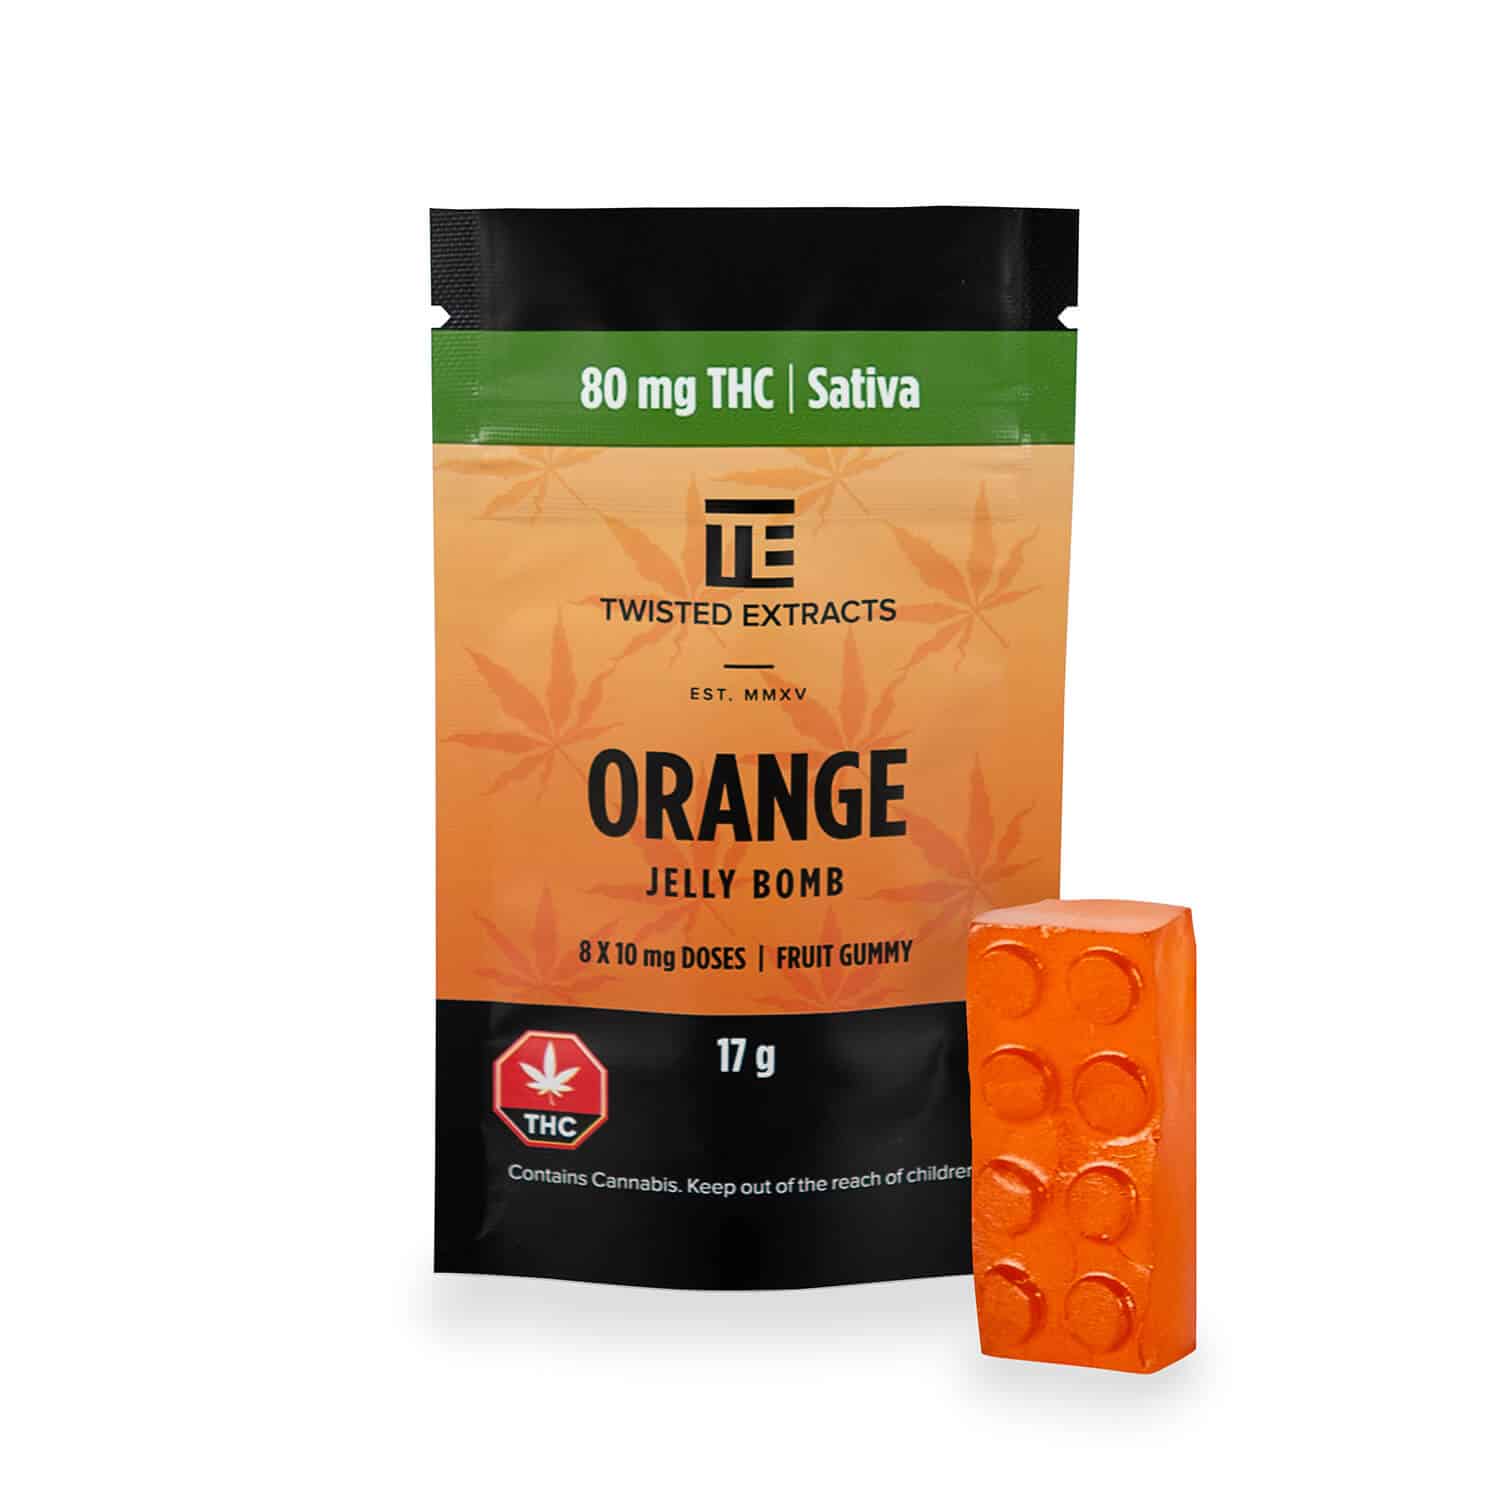 Orange Sativa Jelly Bombs - Twisted Extracts Image